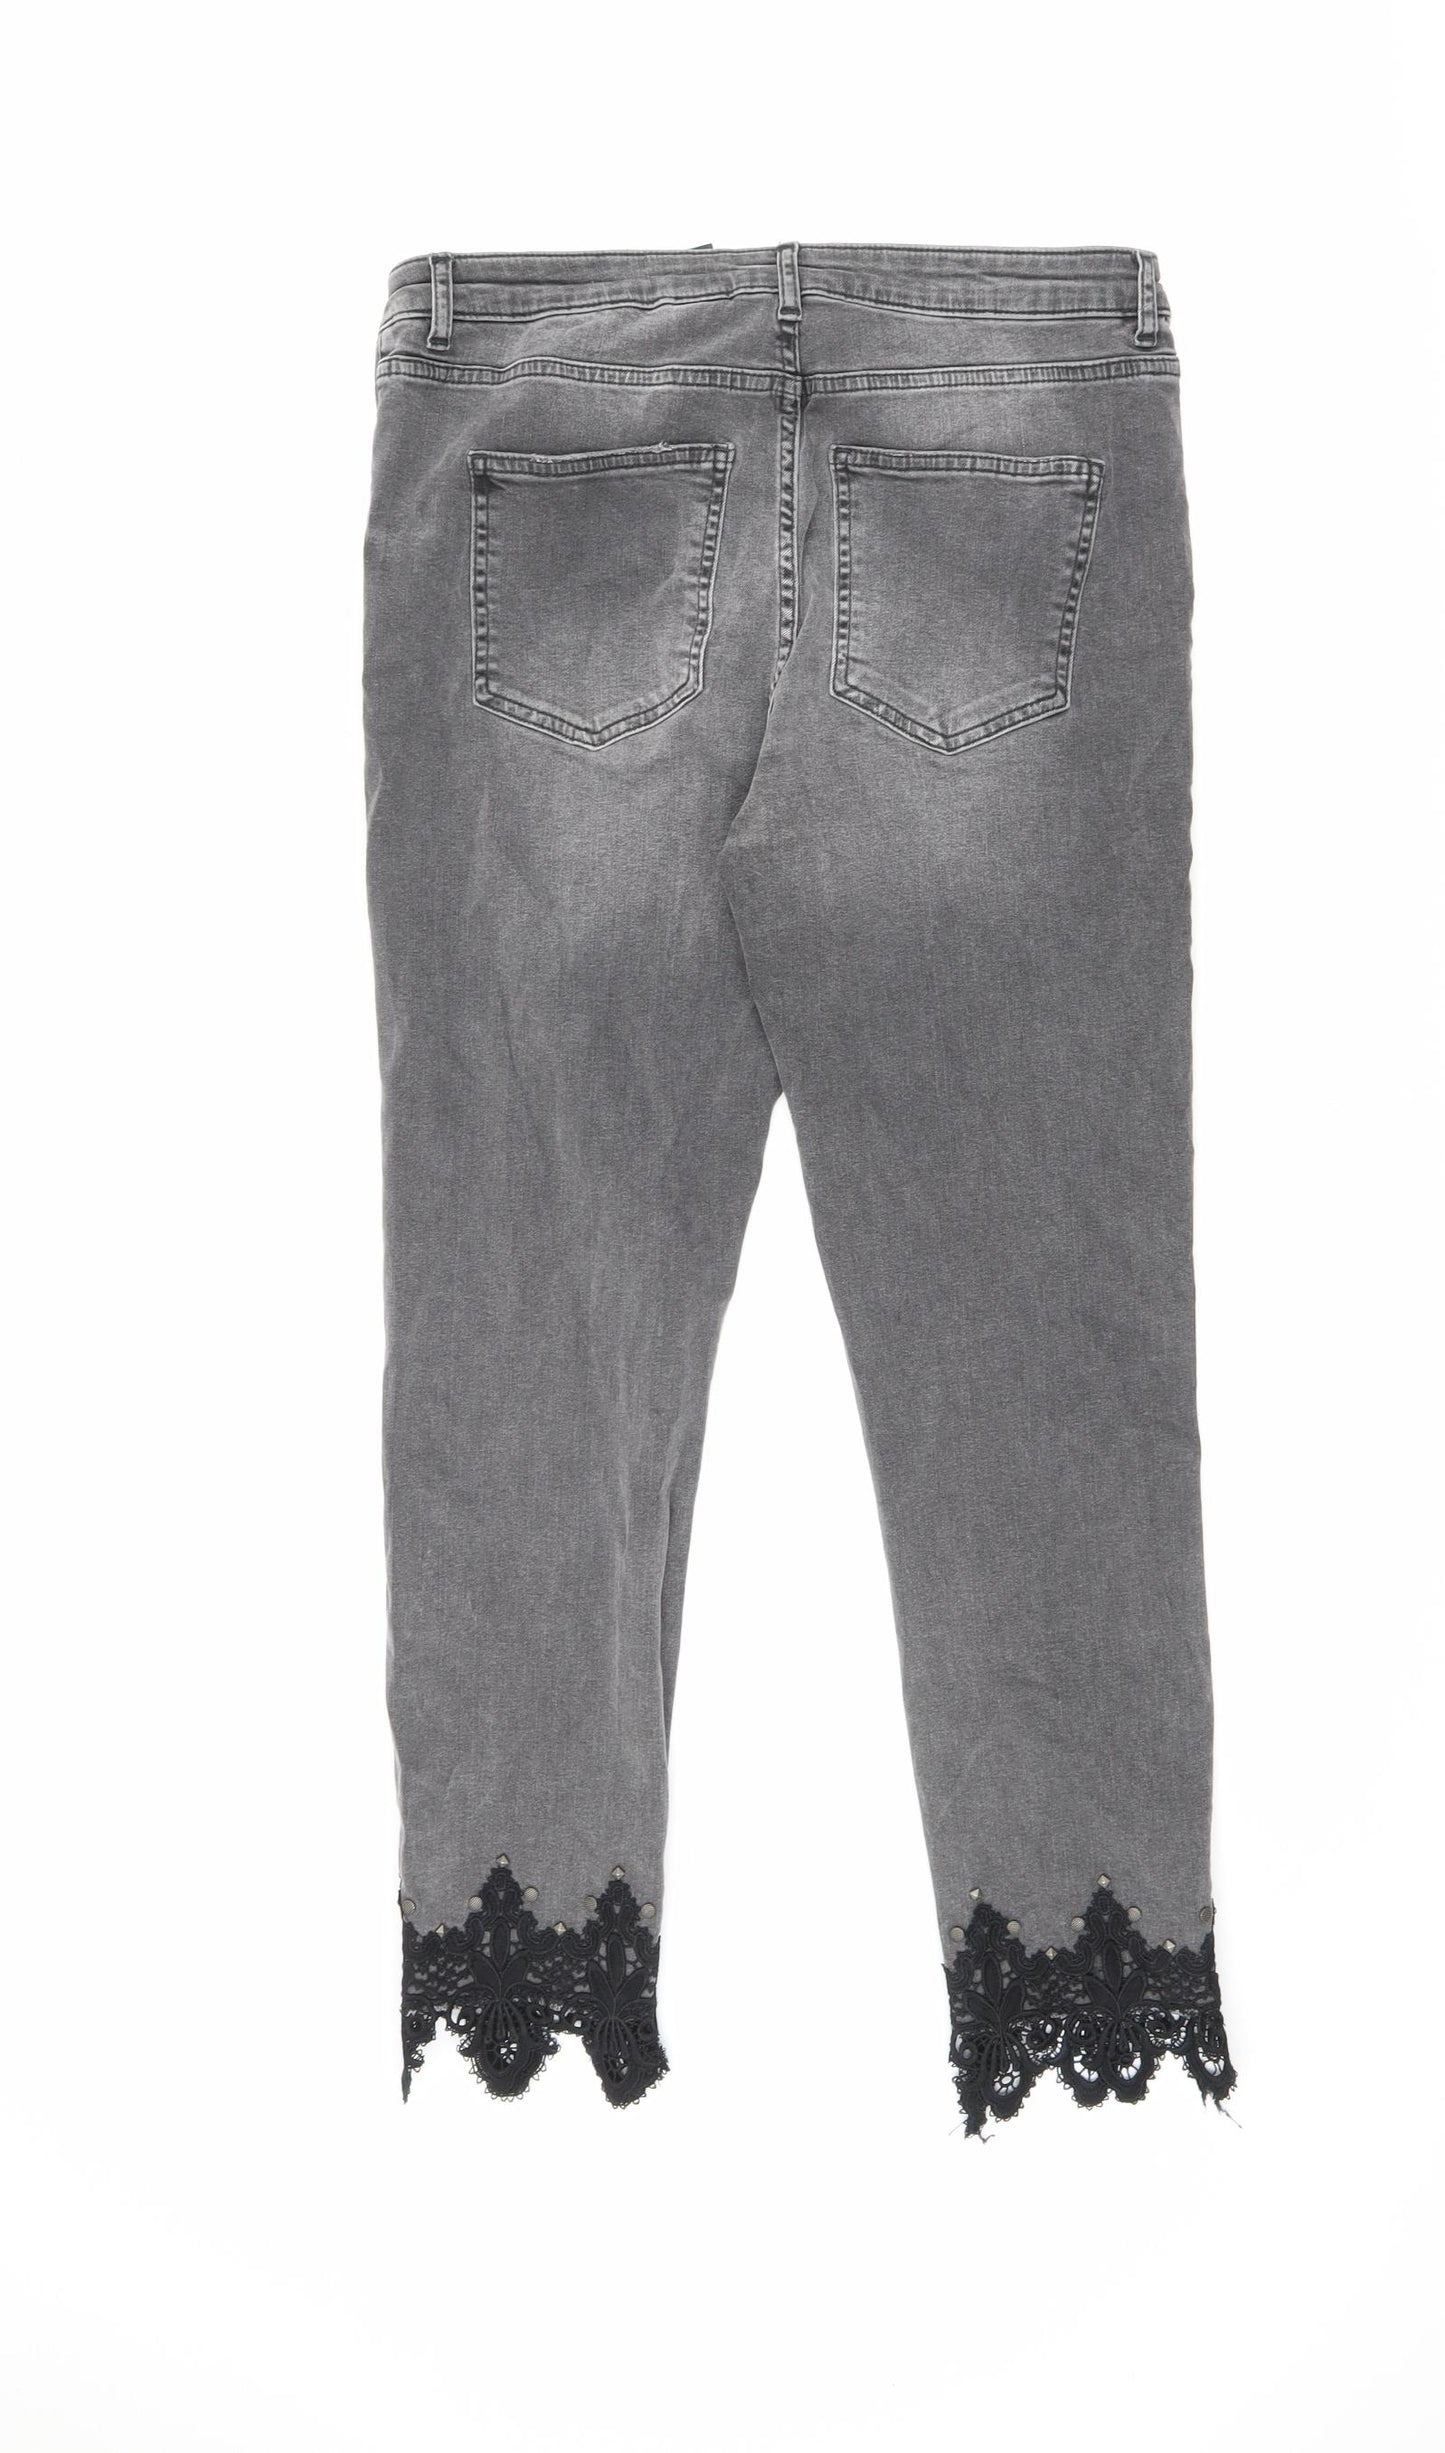 NEXT Womens Grey Cotton Skinny Jeans Size 14 L27.5 in Regular Zip